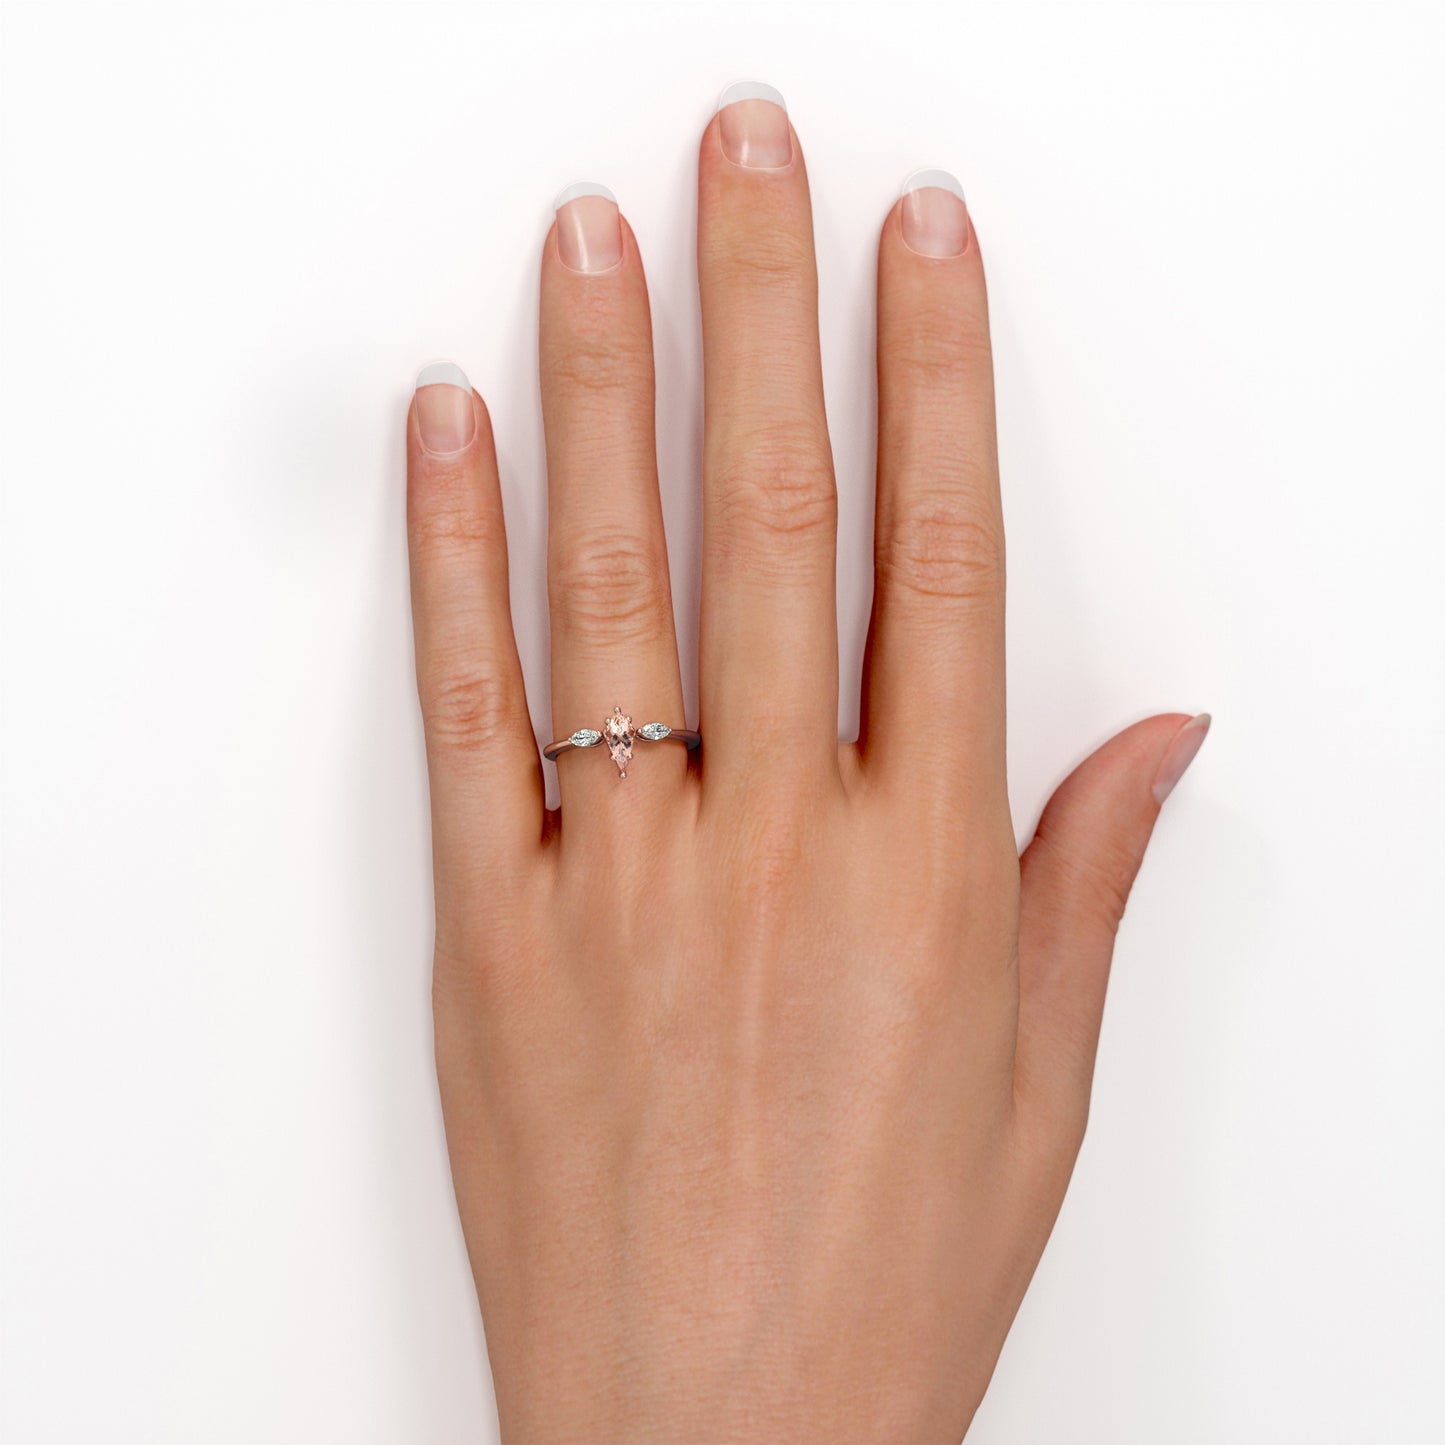 Minimal trilogy 1.1 carat Kite shaped Peach Pink Morganite and diamond engagement ring for women in Rose gold